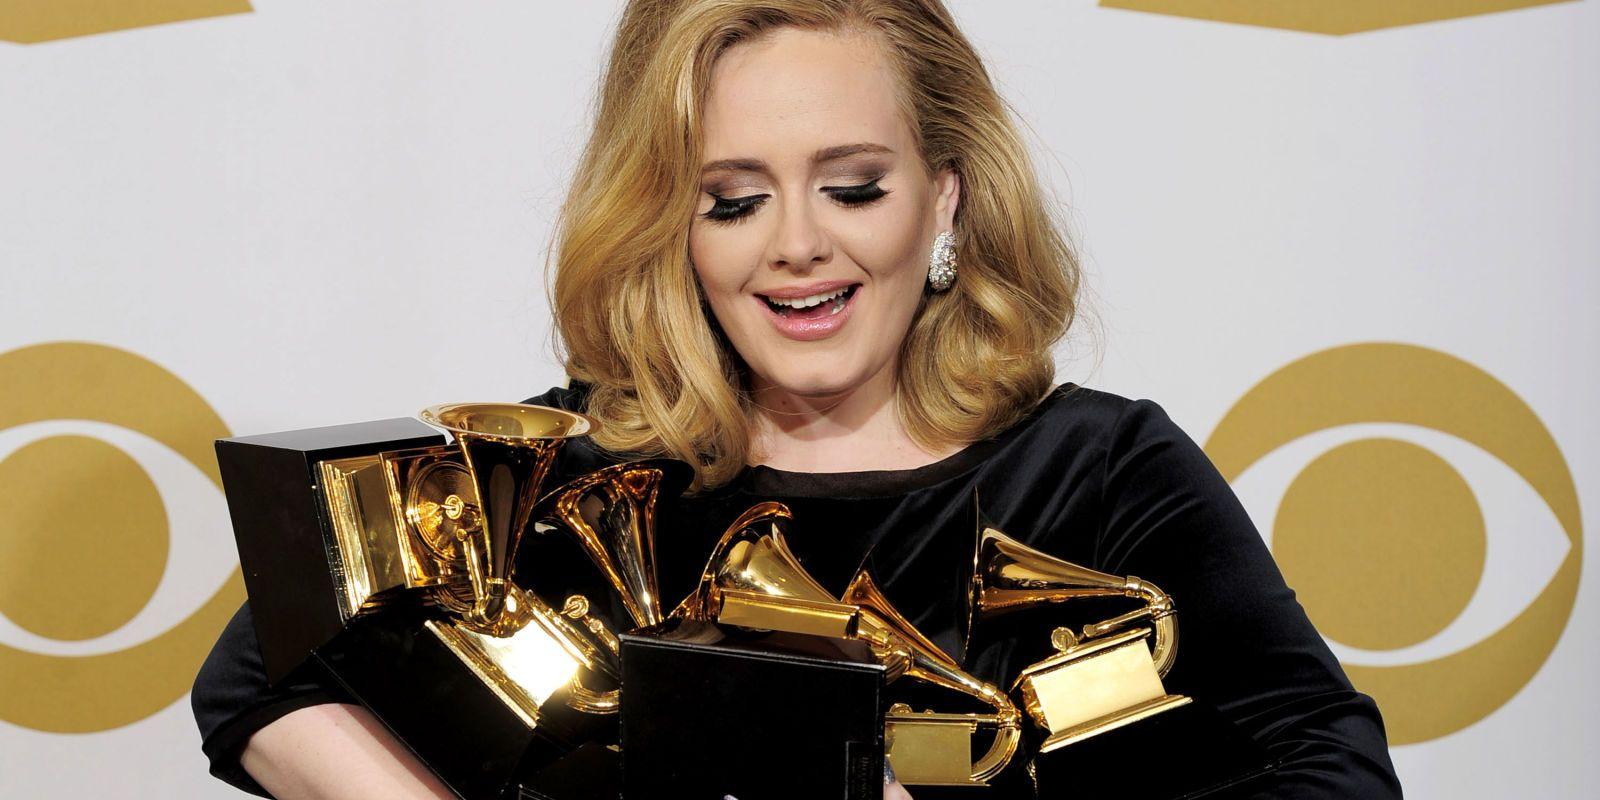 Adele, Foo Fighters dominate 2012 Grammy Awards